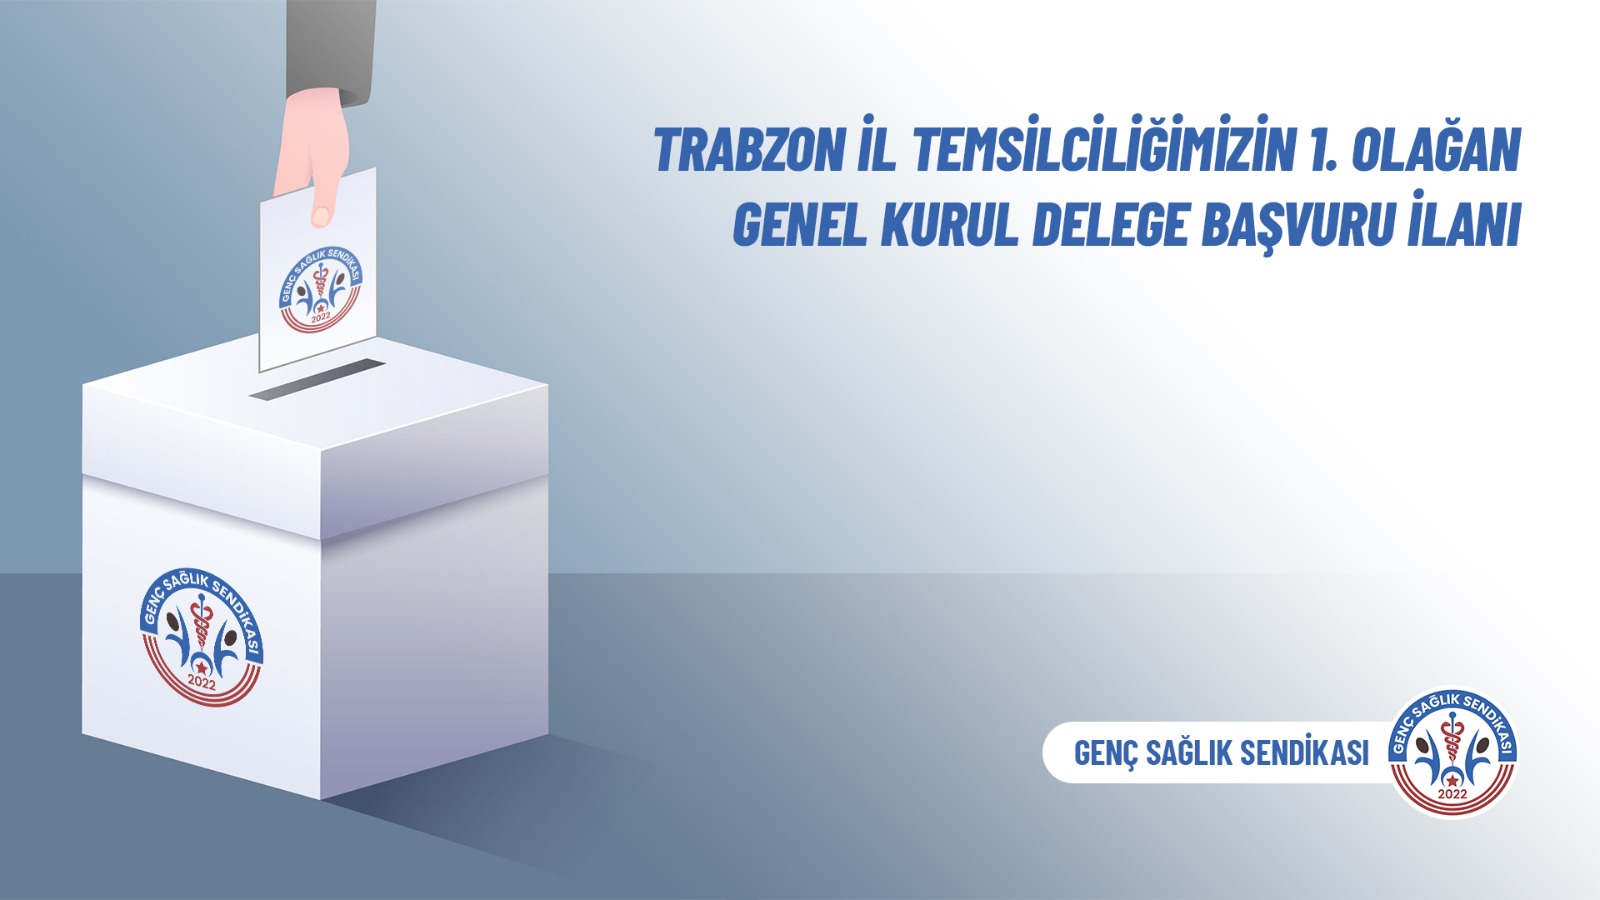 Trabzon İl Temsilciliğimizin 1. Olağan Genel Kurul Delege Başvuru İlanı